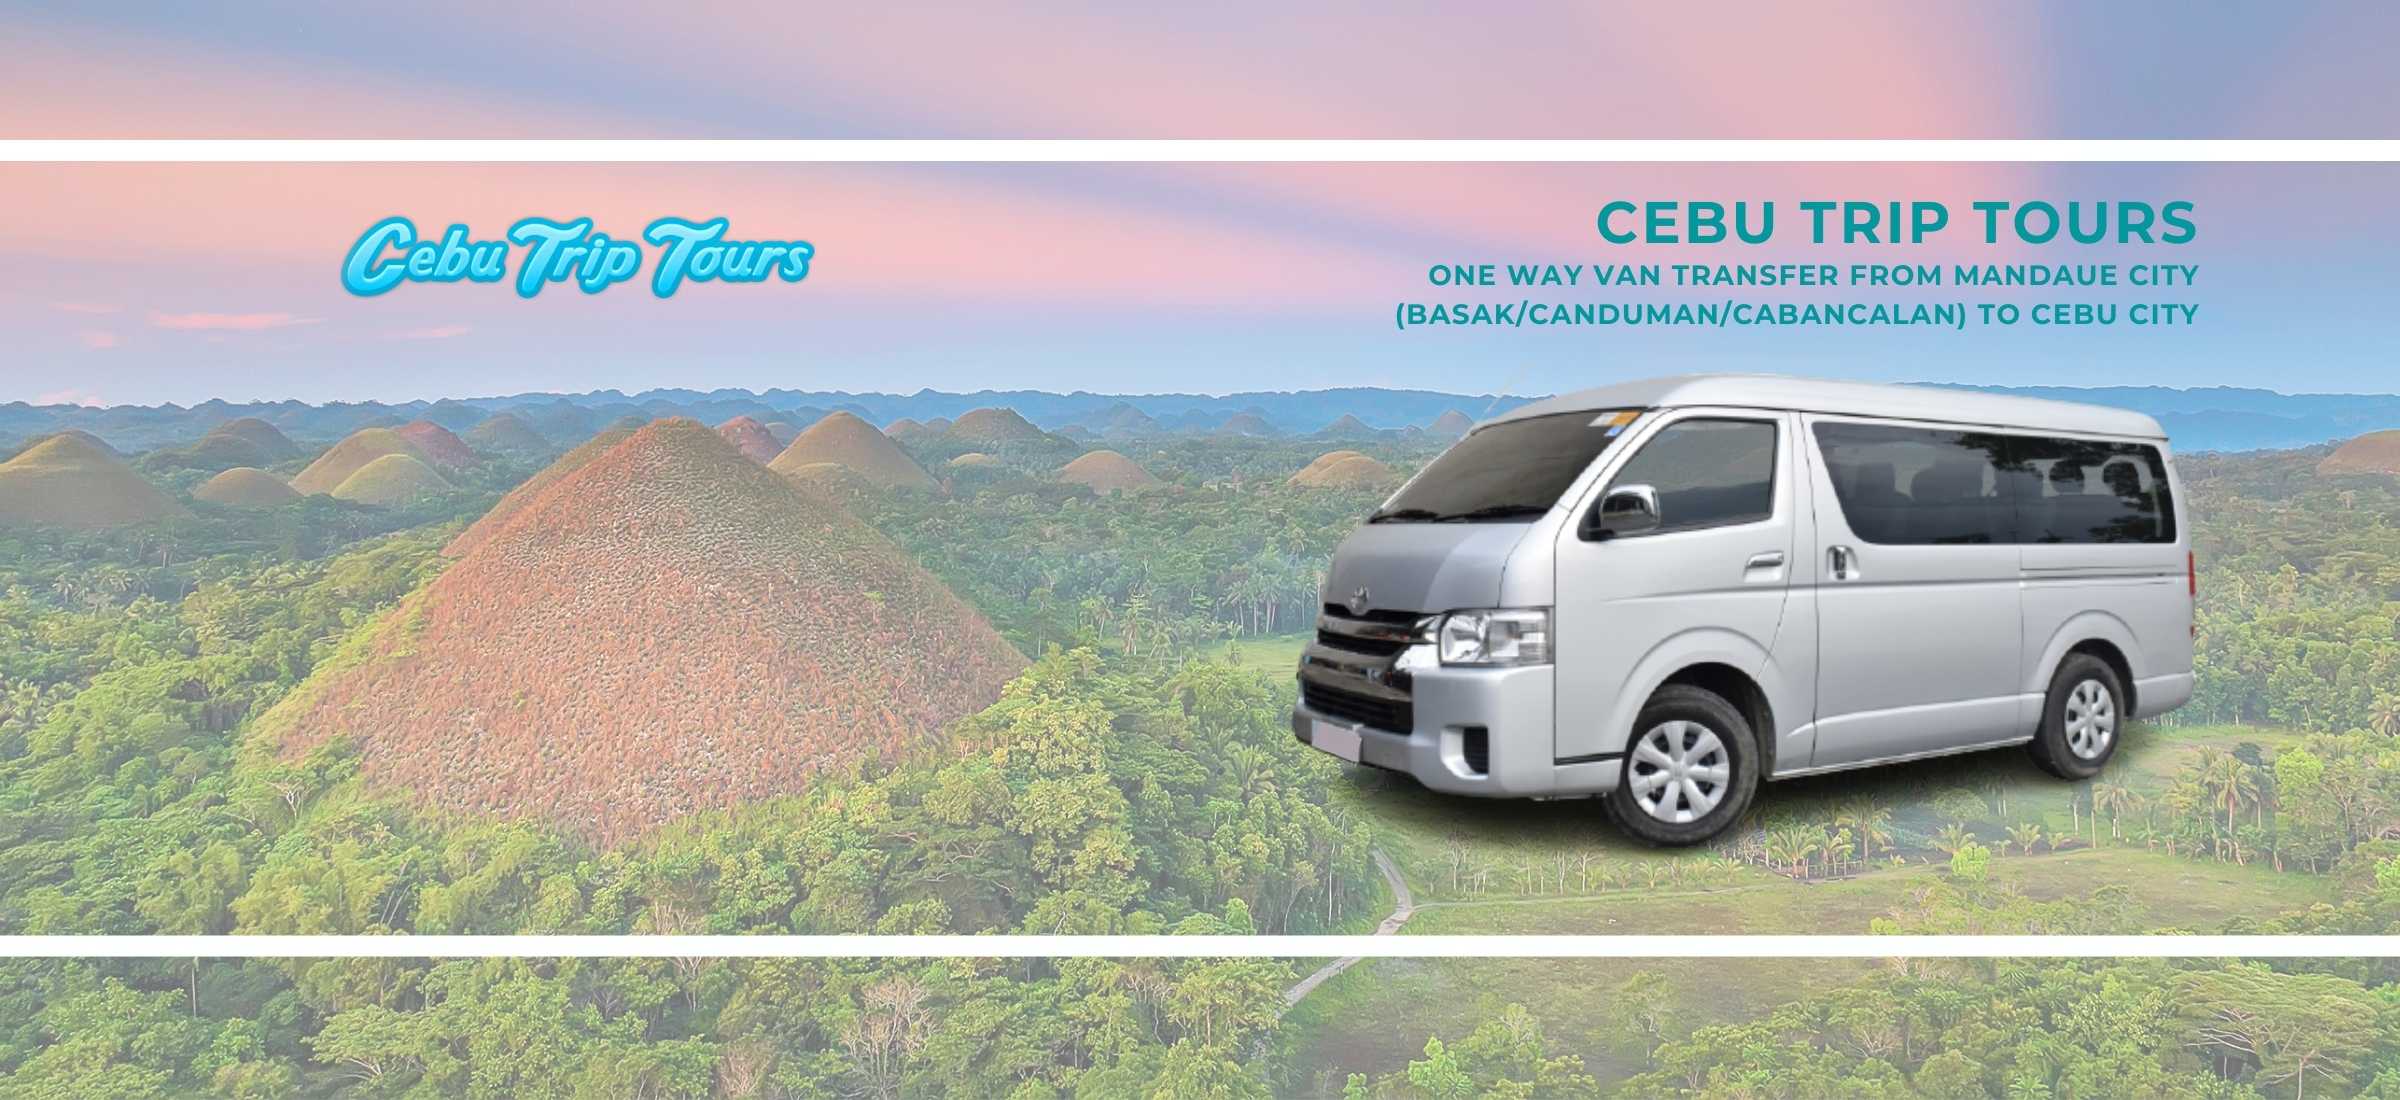 One Way Transfer from Mandaue City (Basak/Canduman/Cabancalan) to Cebu City